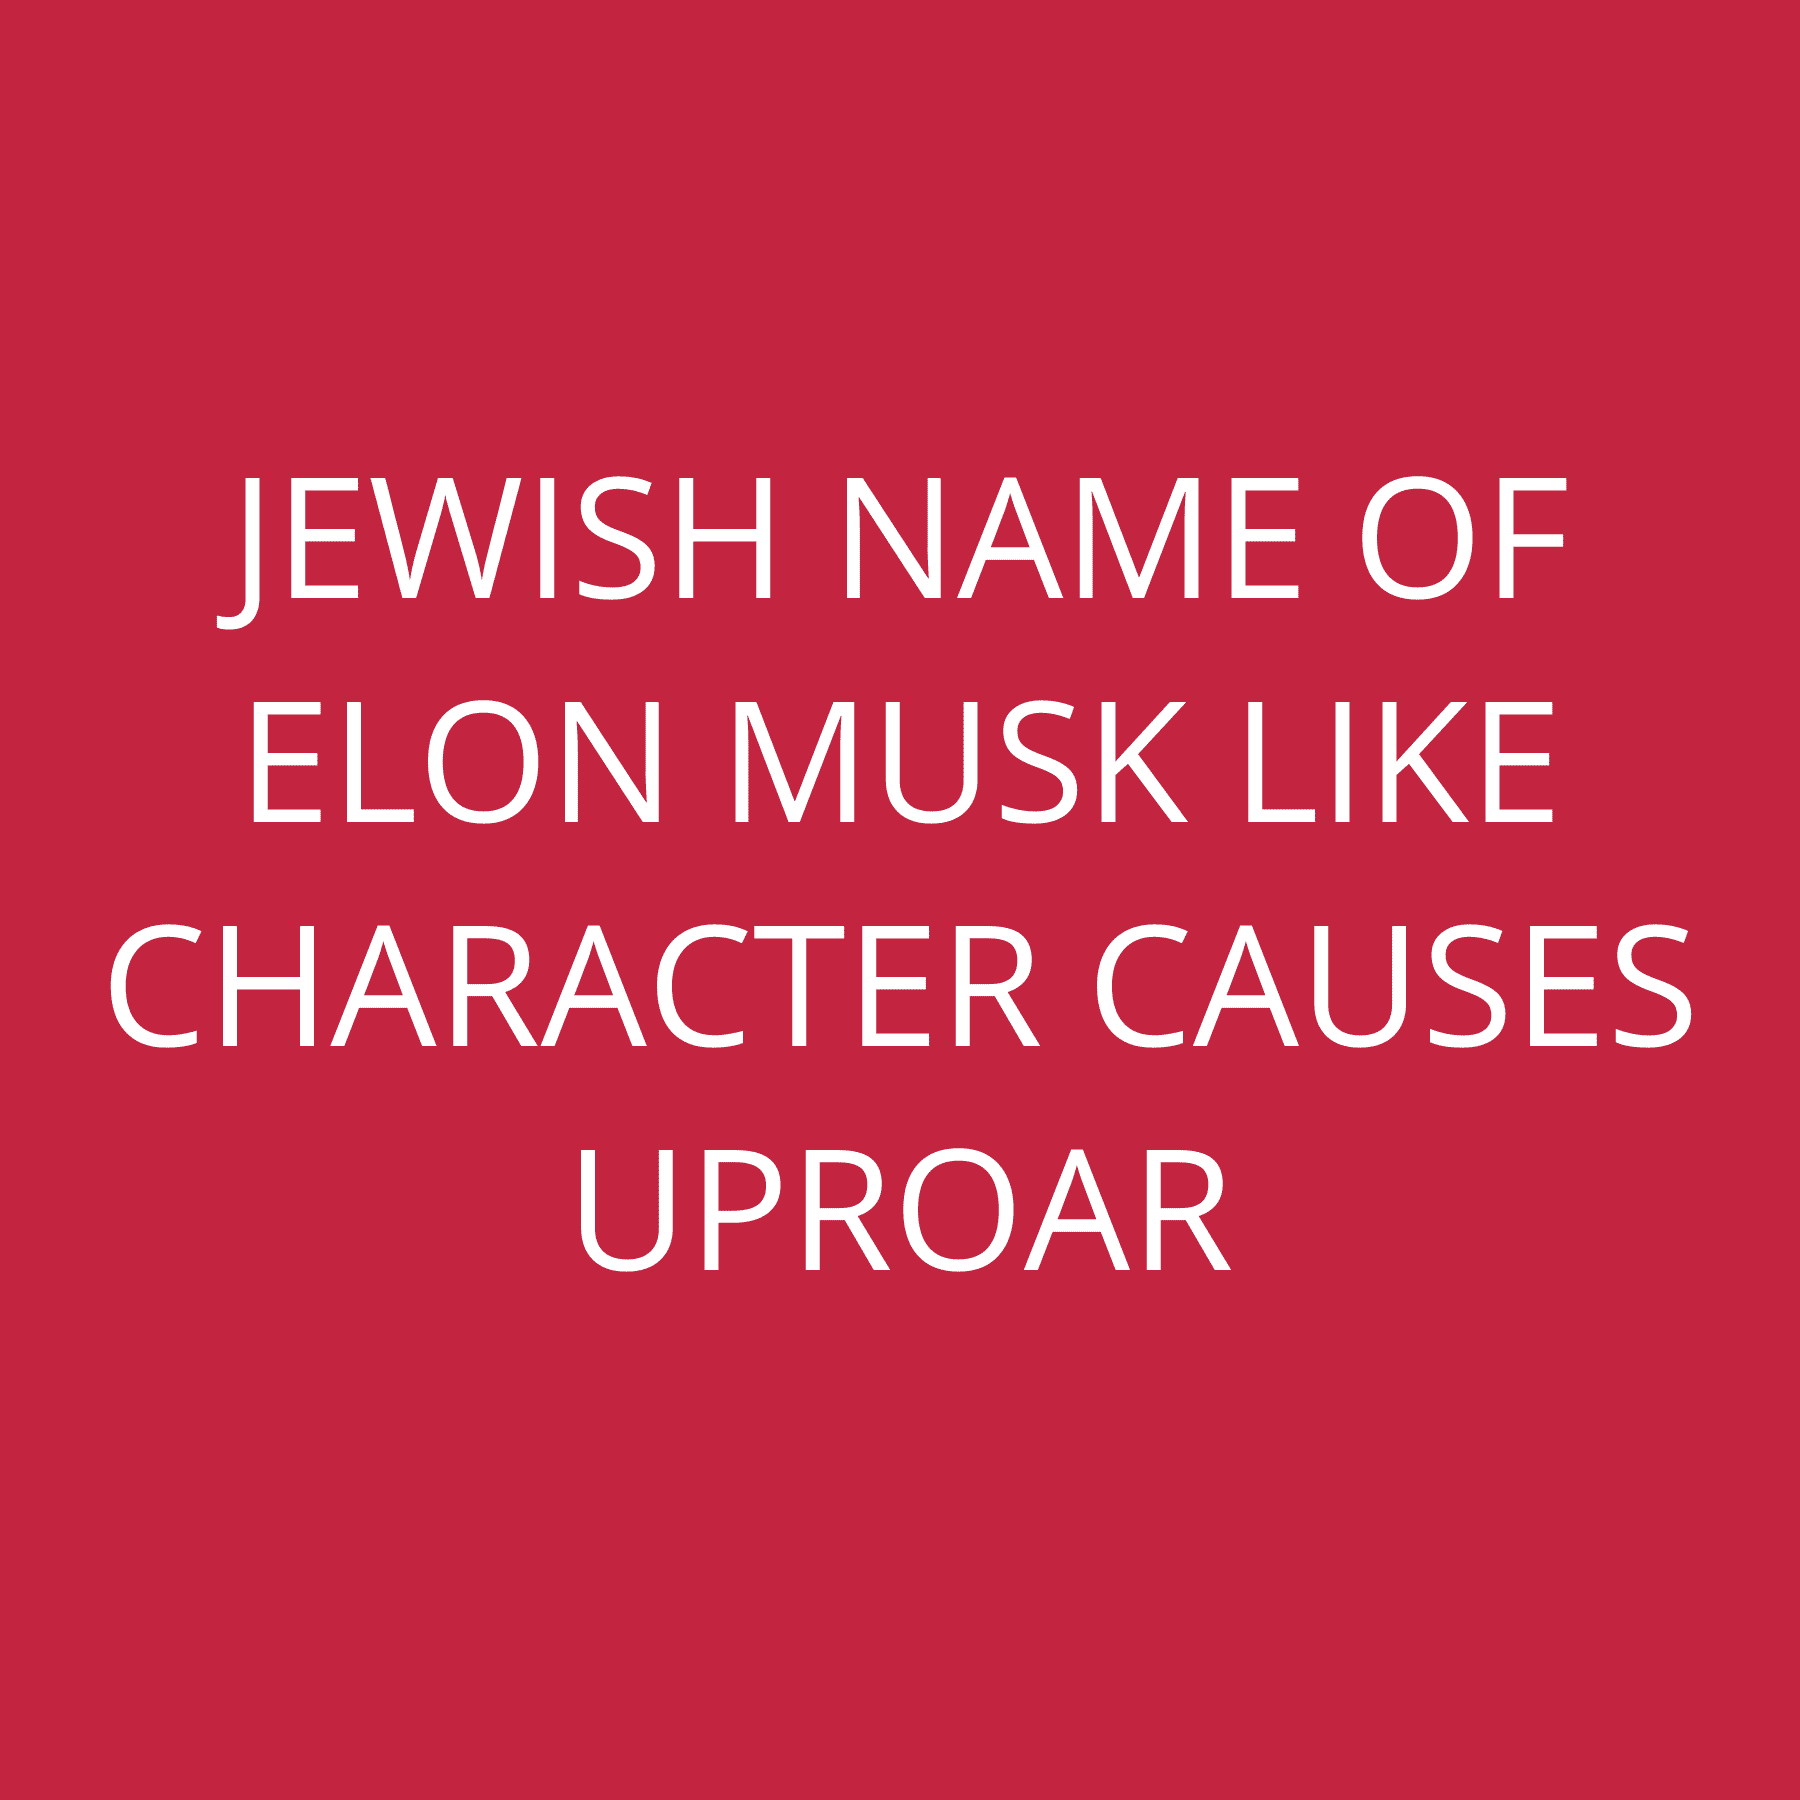 Jewish name of Elon Musk like character causes uproar